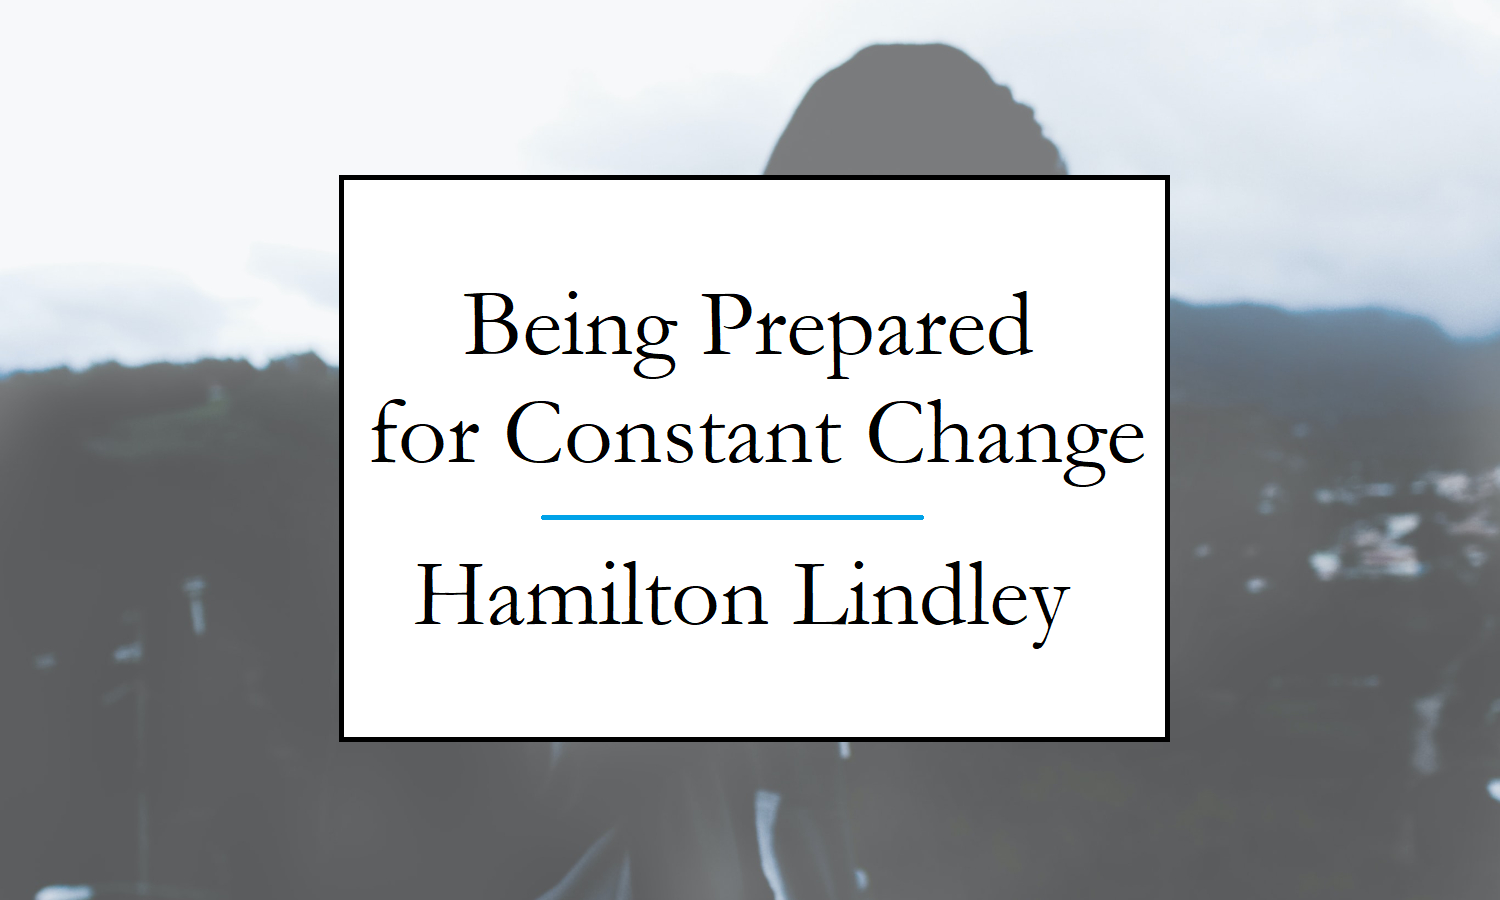 Hamilton Lindley always changing